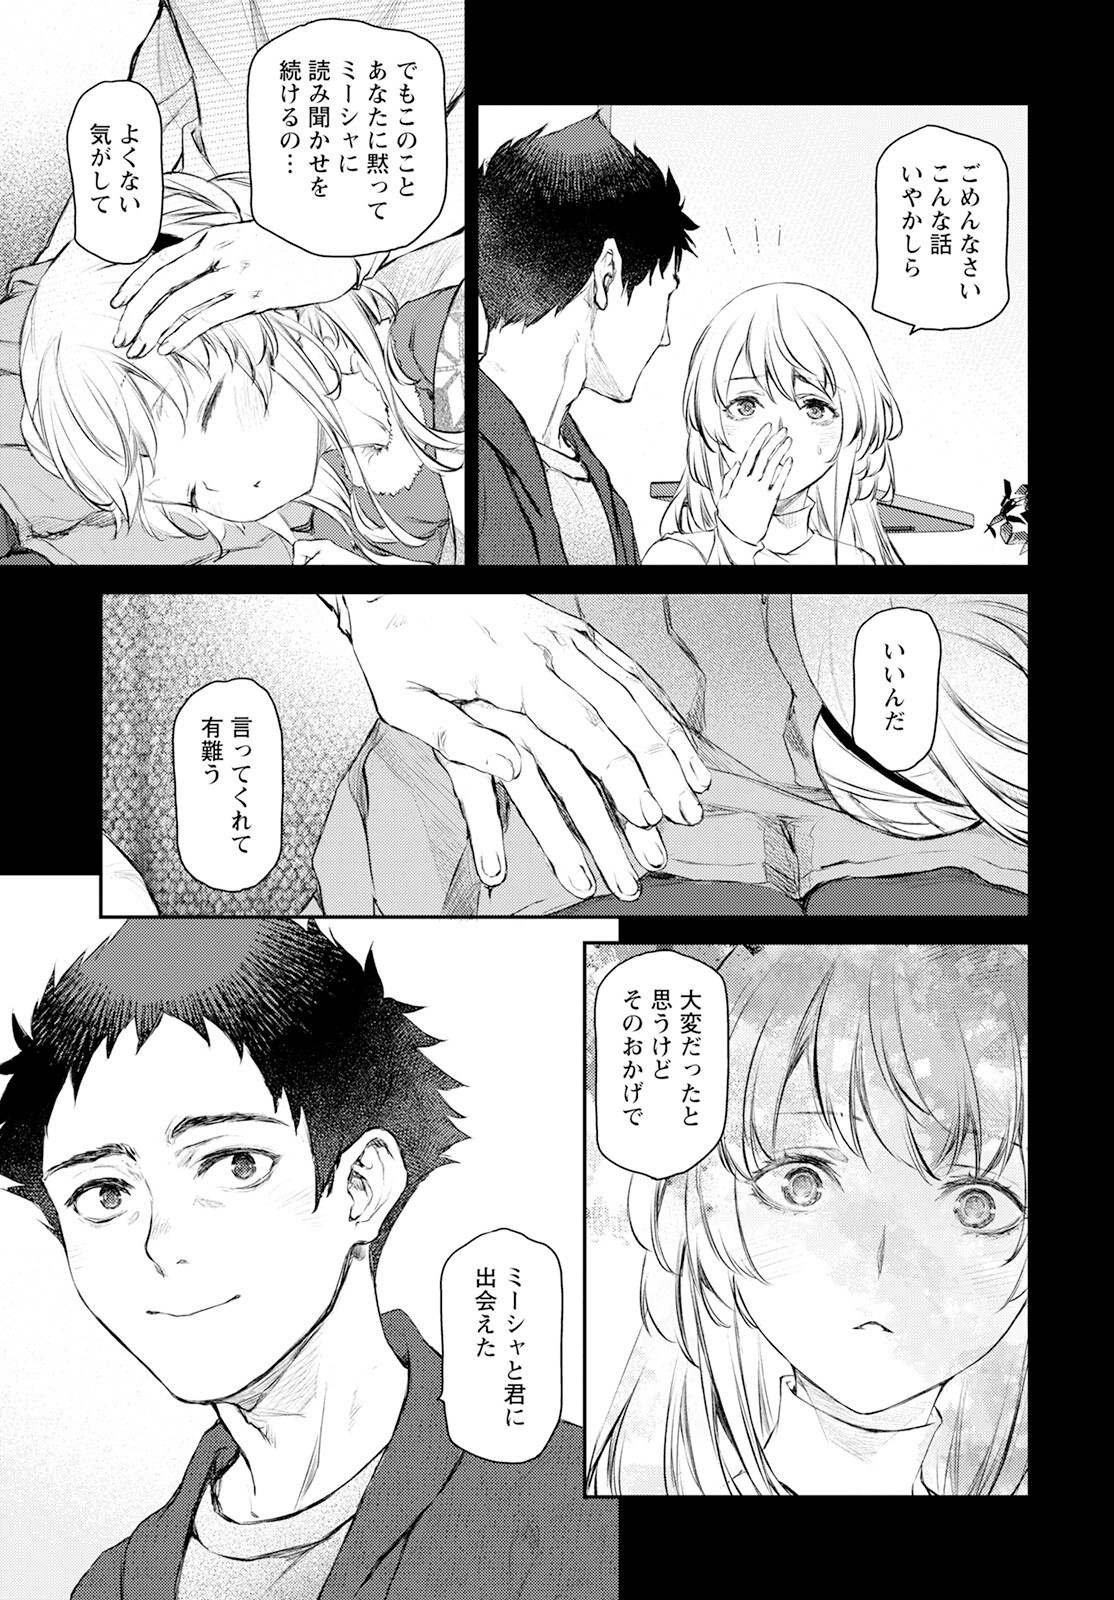 Uchi no Maid ga Uzasugiru! - Chapter 57 - Page 23